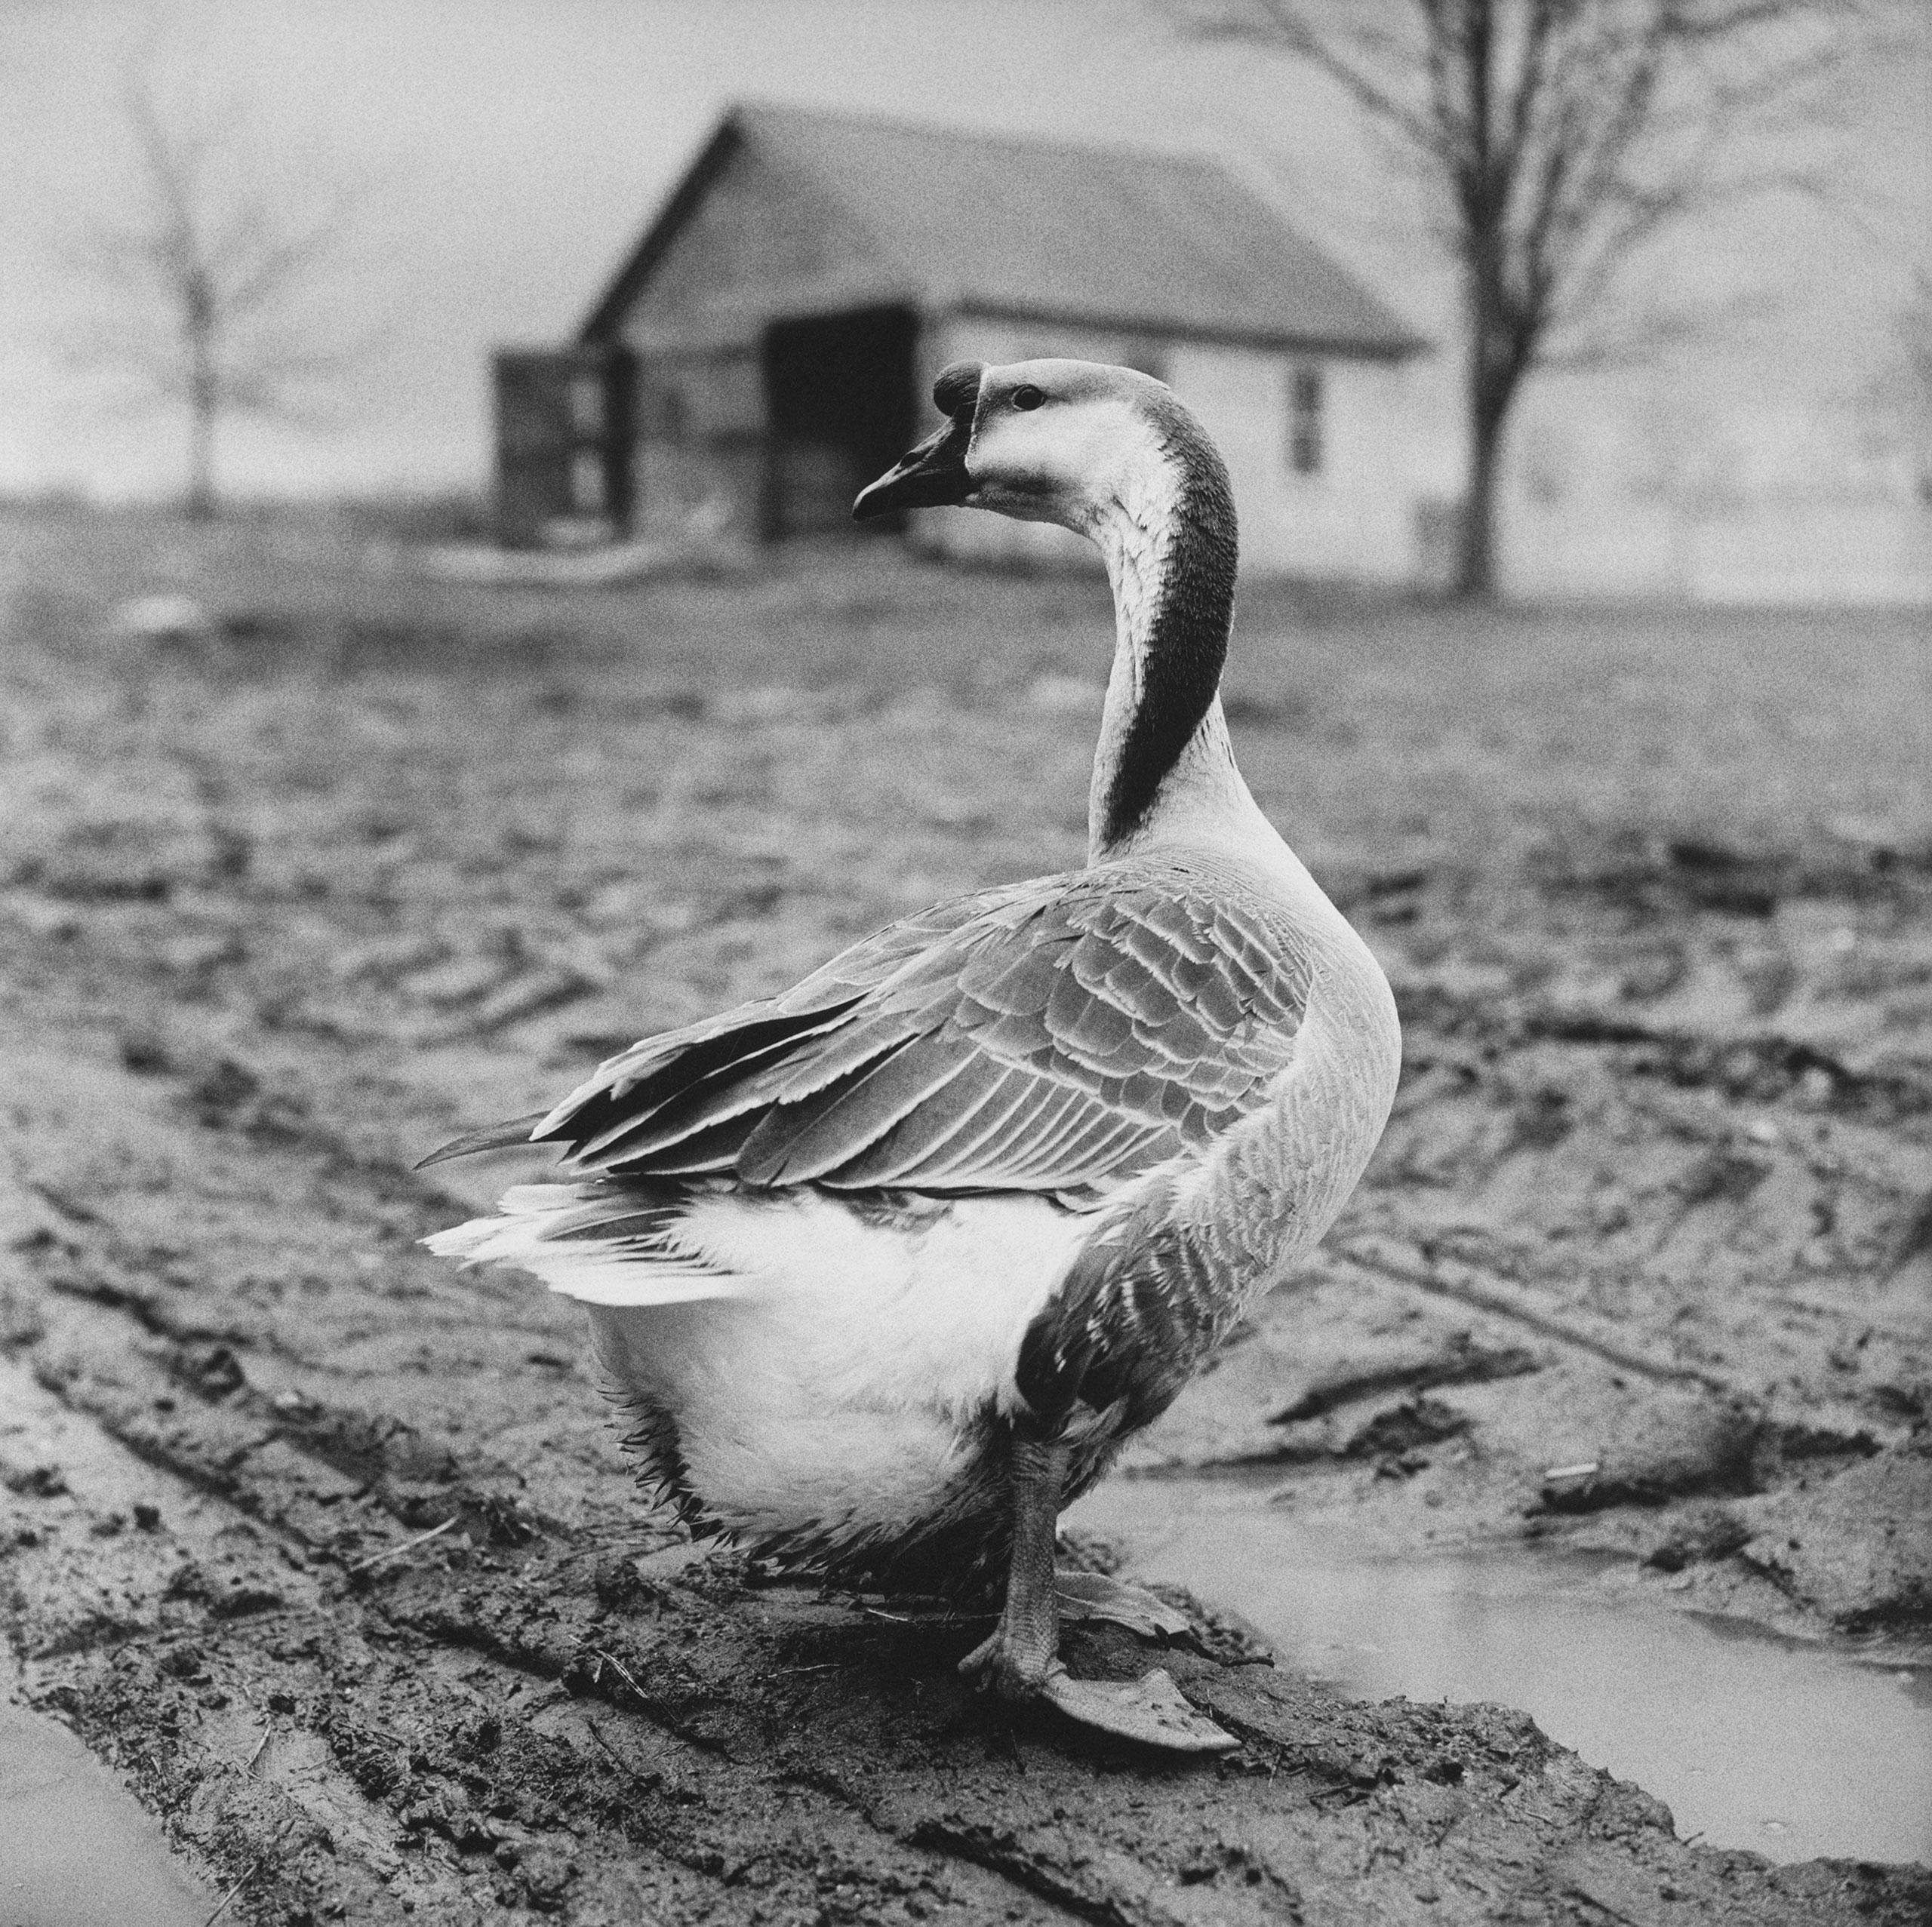 Goose with Bent Neck, 1981